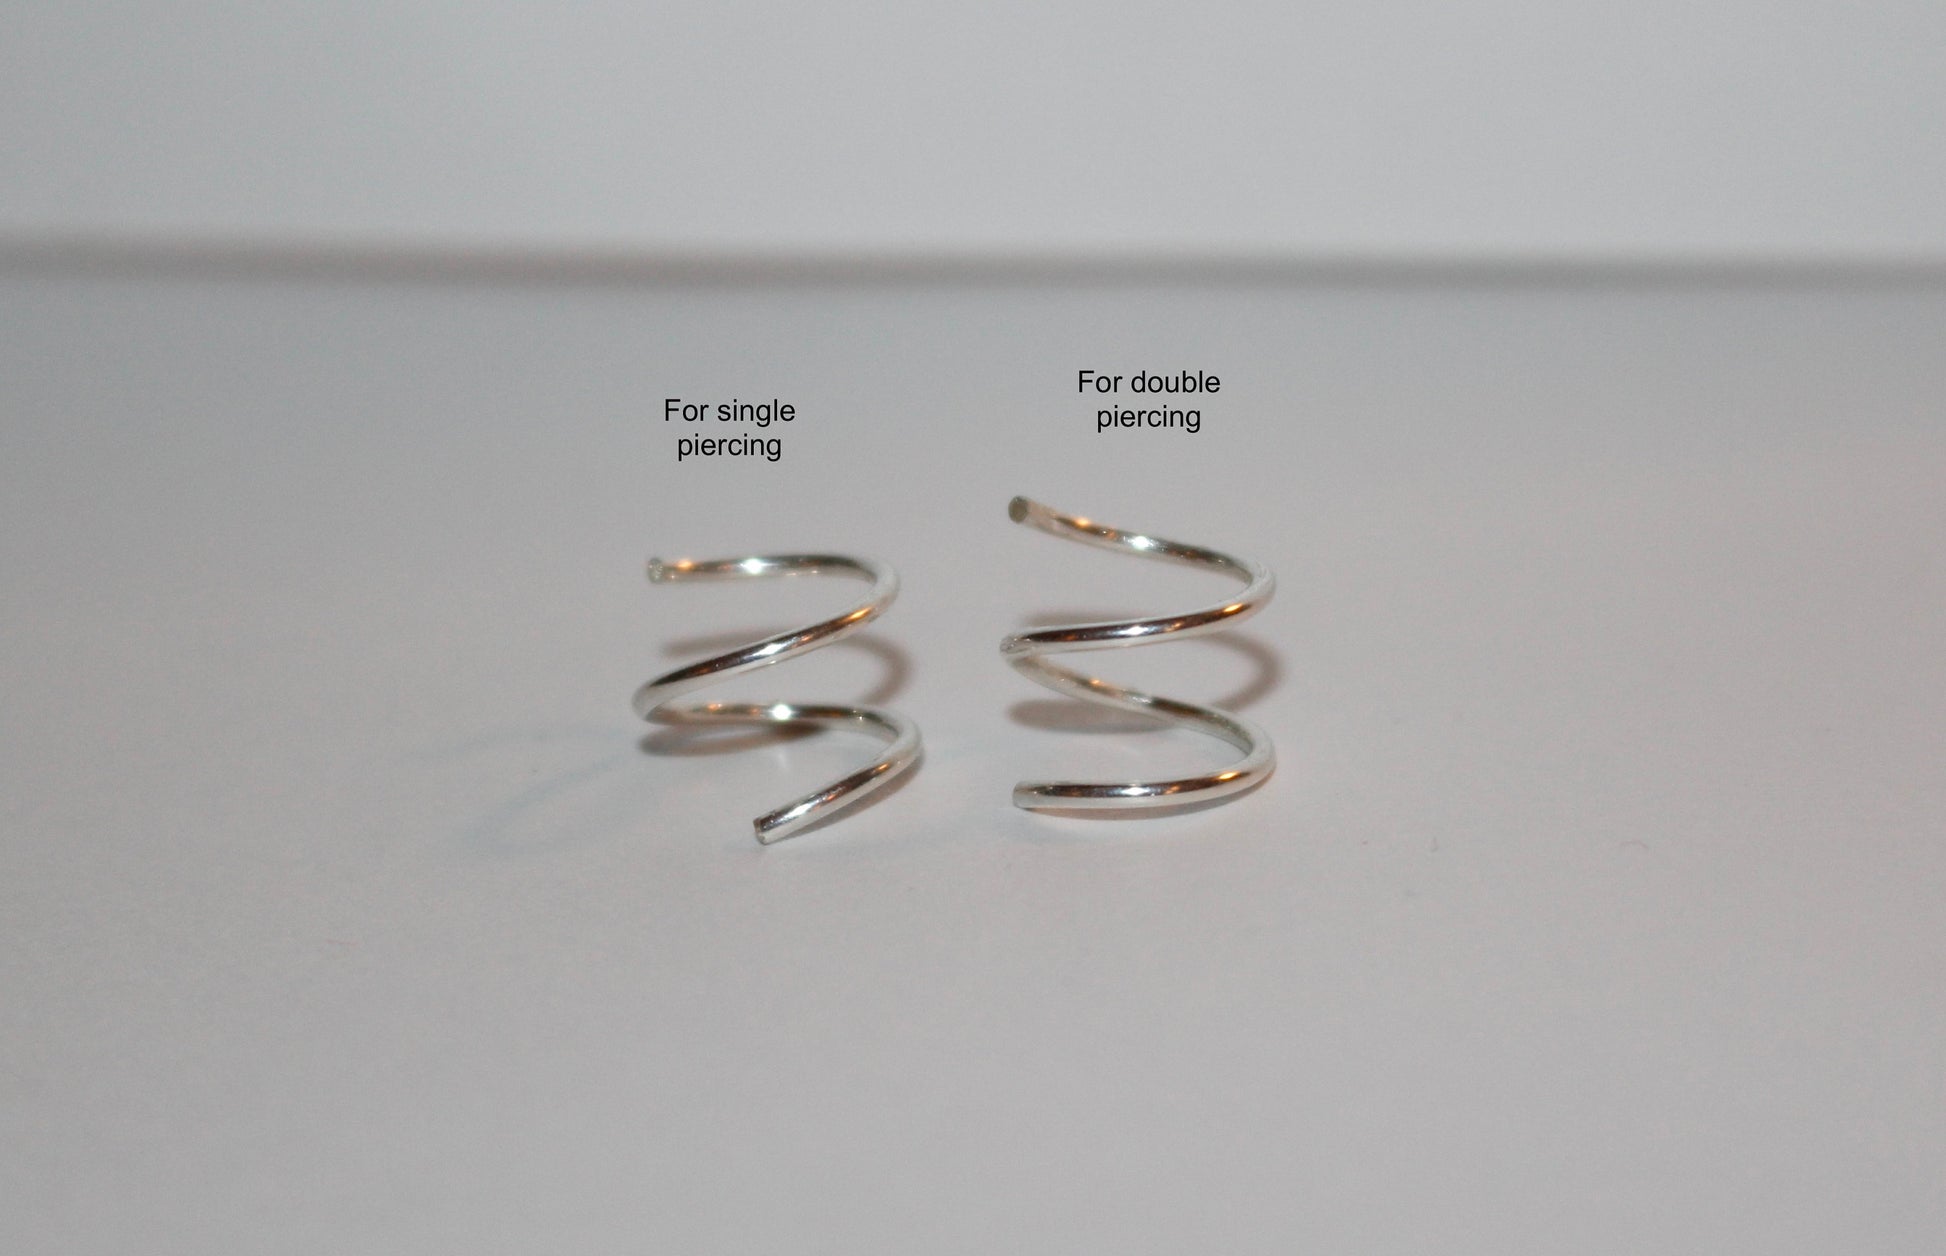 Double Hoop Earrings in Sterling Silver - Can be worn in a single or double piercing!